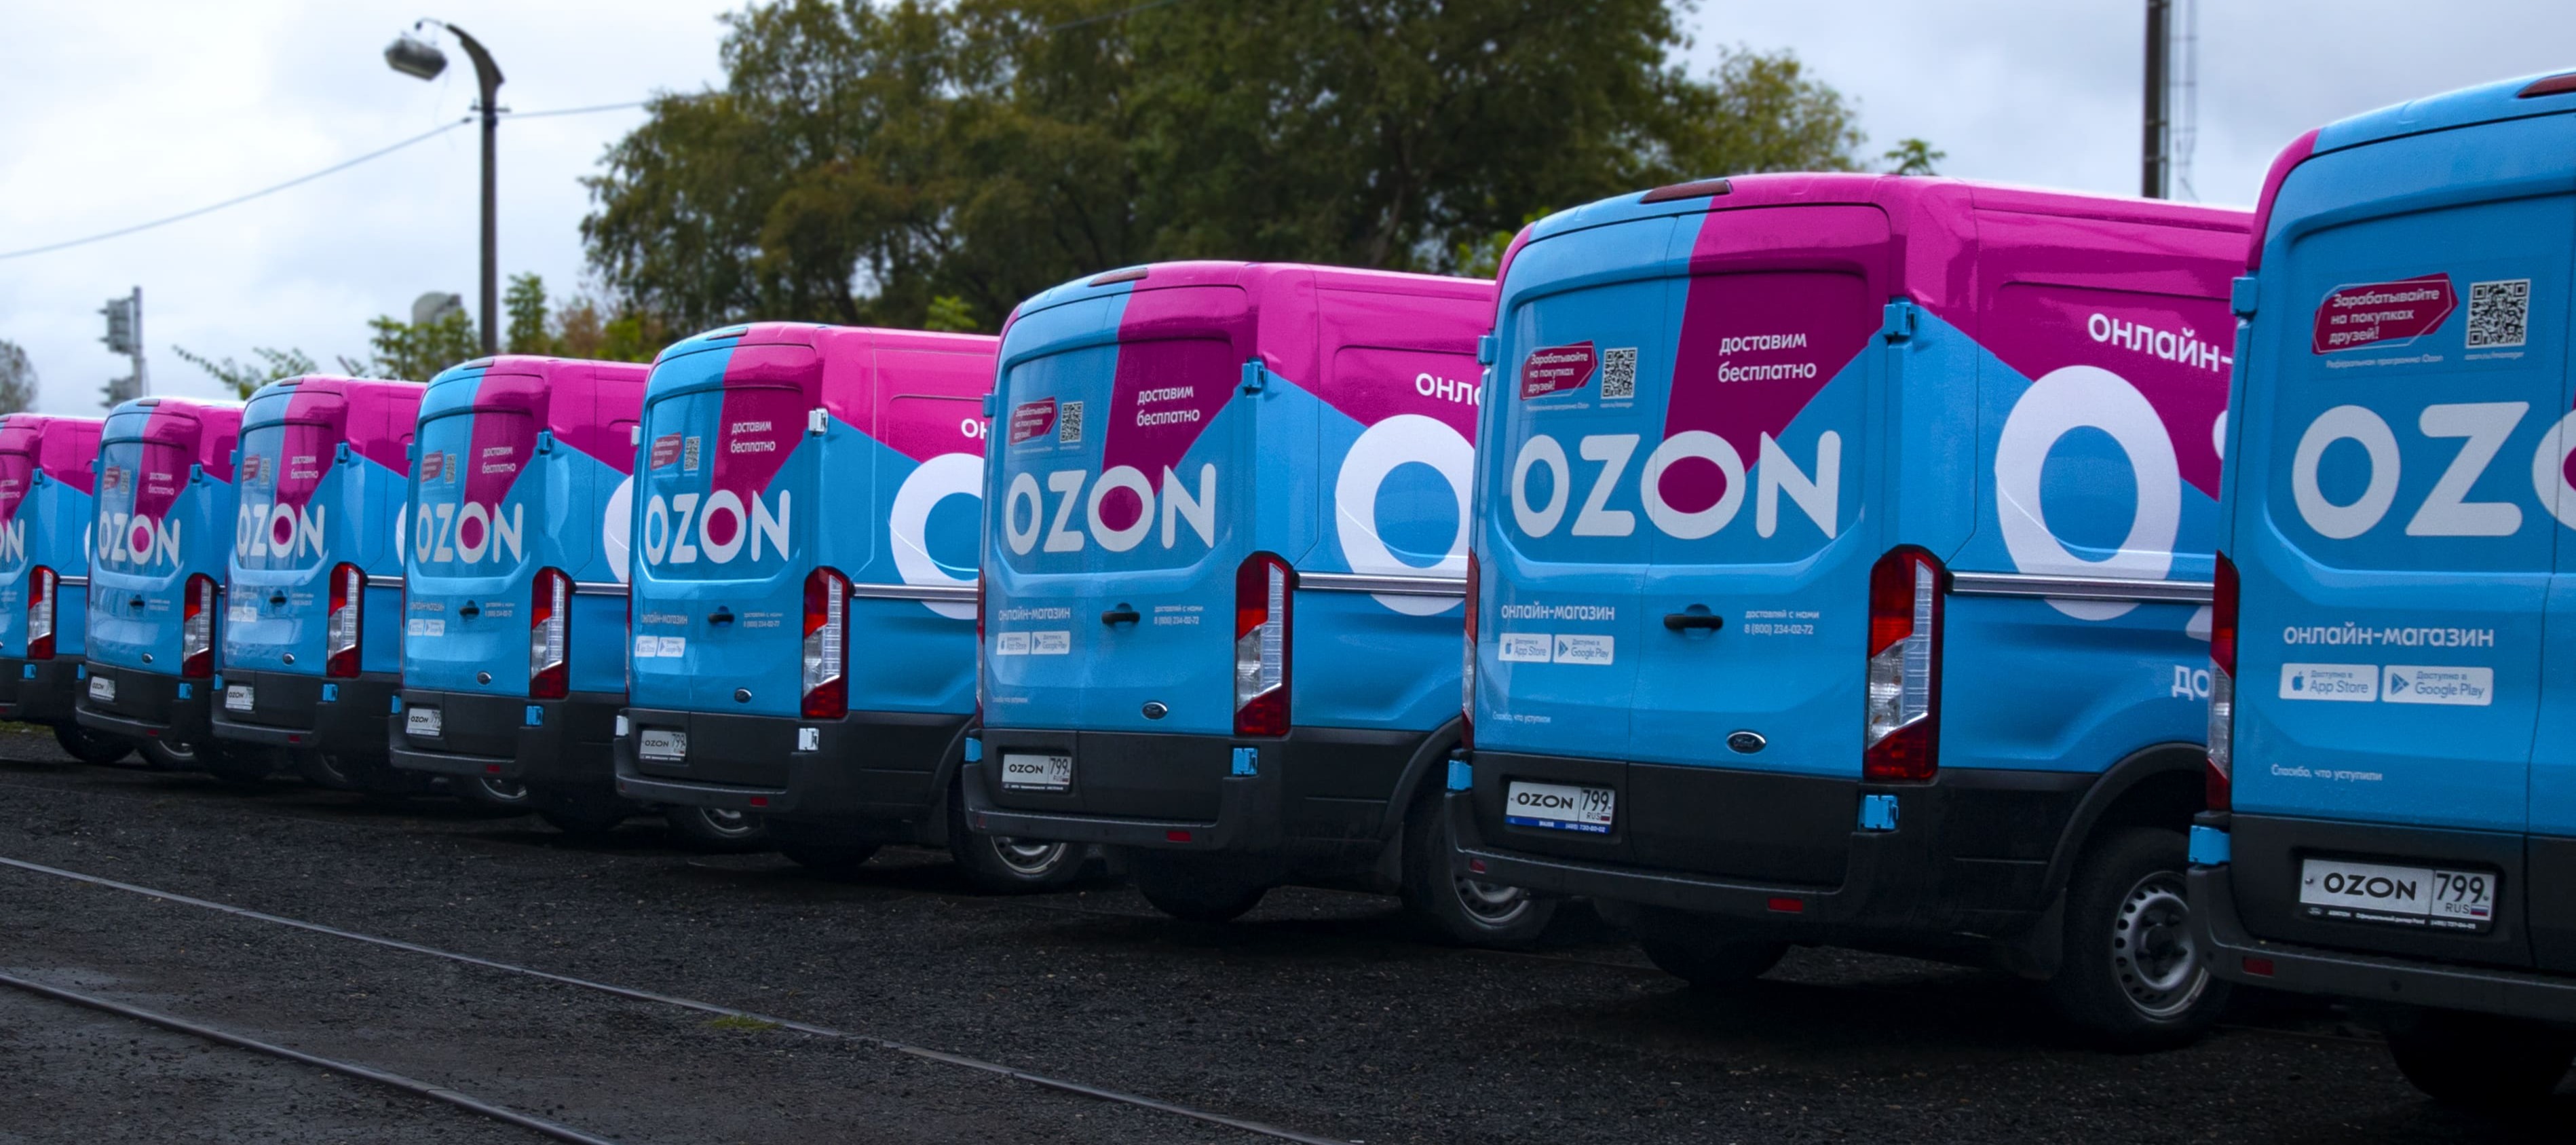 Ozon sports. OZON компания. OZON фура. Фургон Озон. Озон фото.